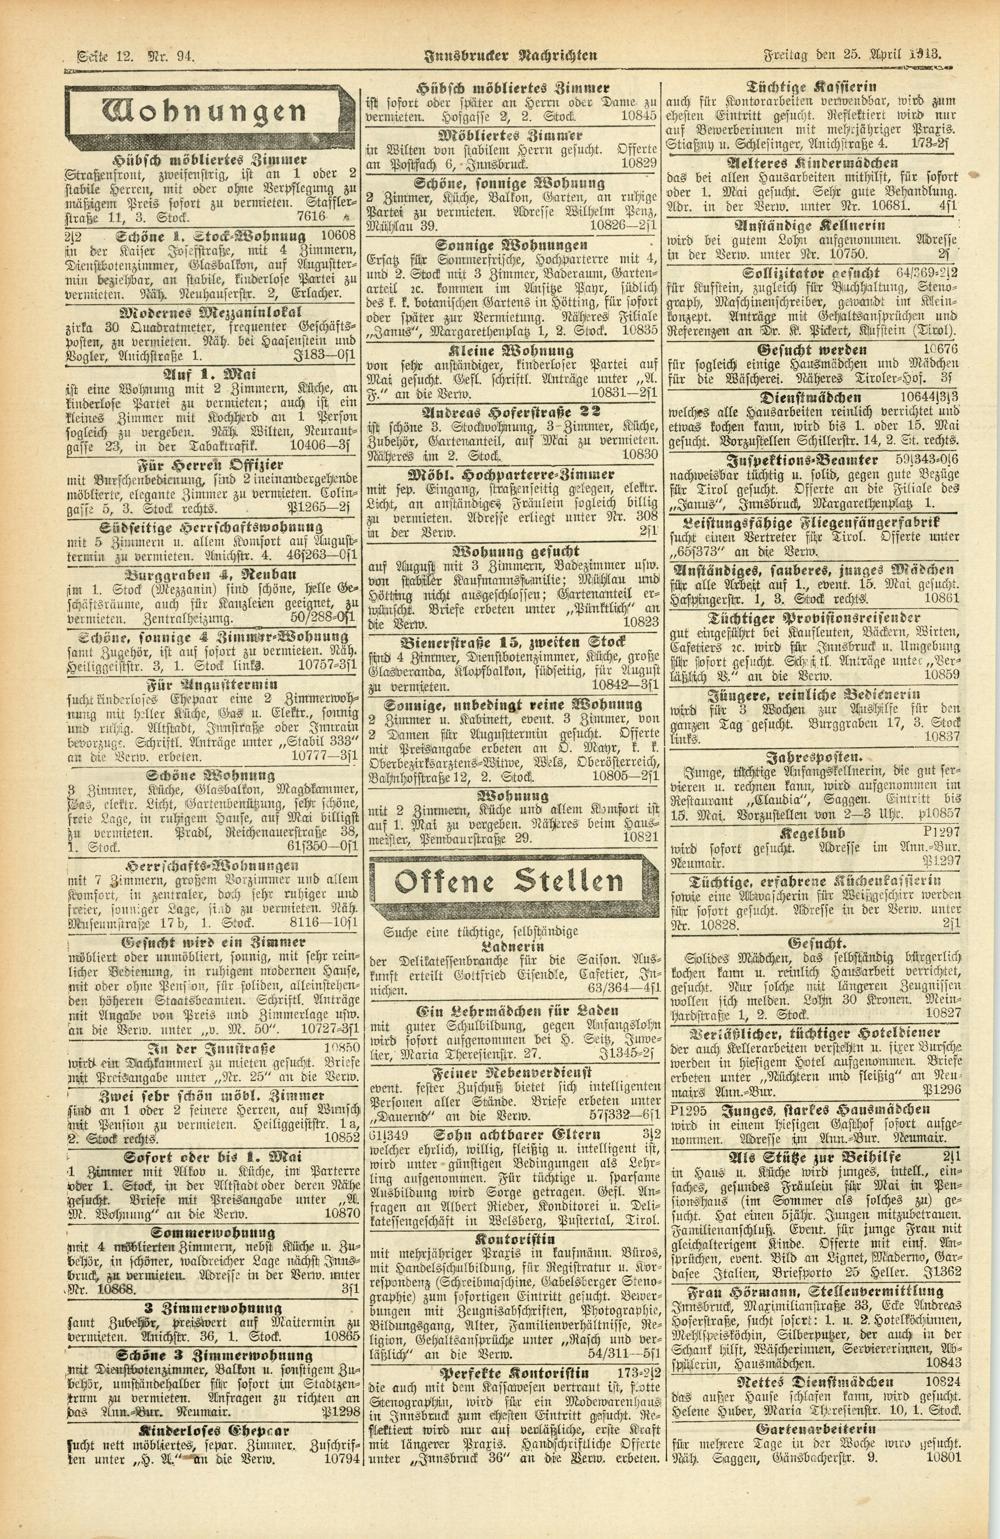 , getk 12. Nr. 94, Innsbrucker Nachrichten Freitag den 25. April,1313.